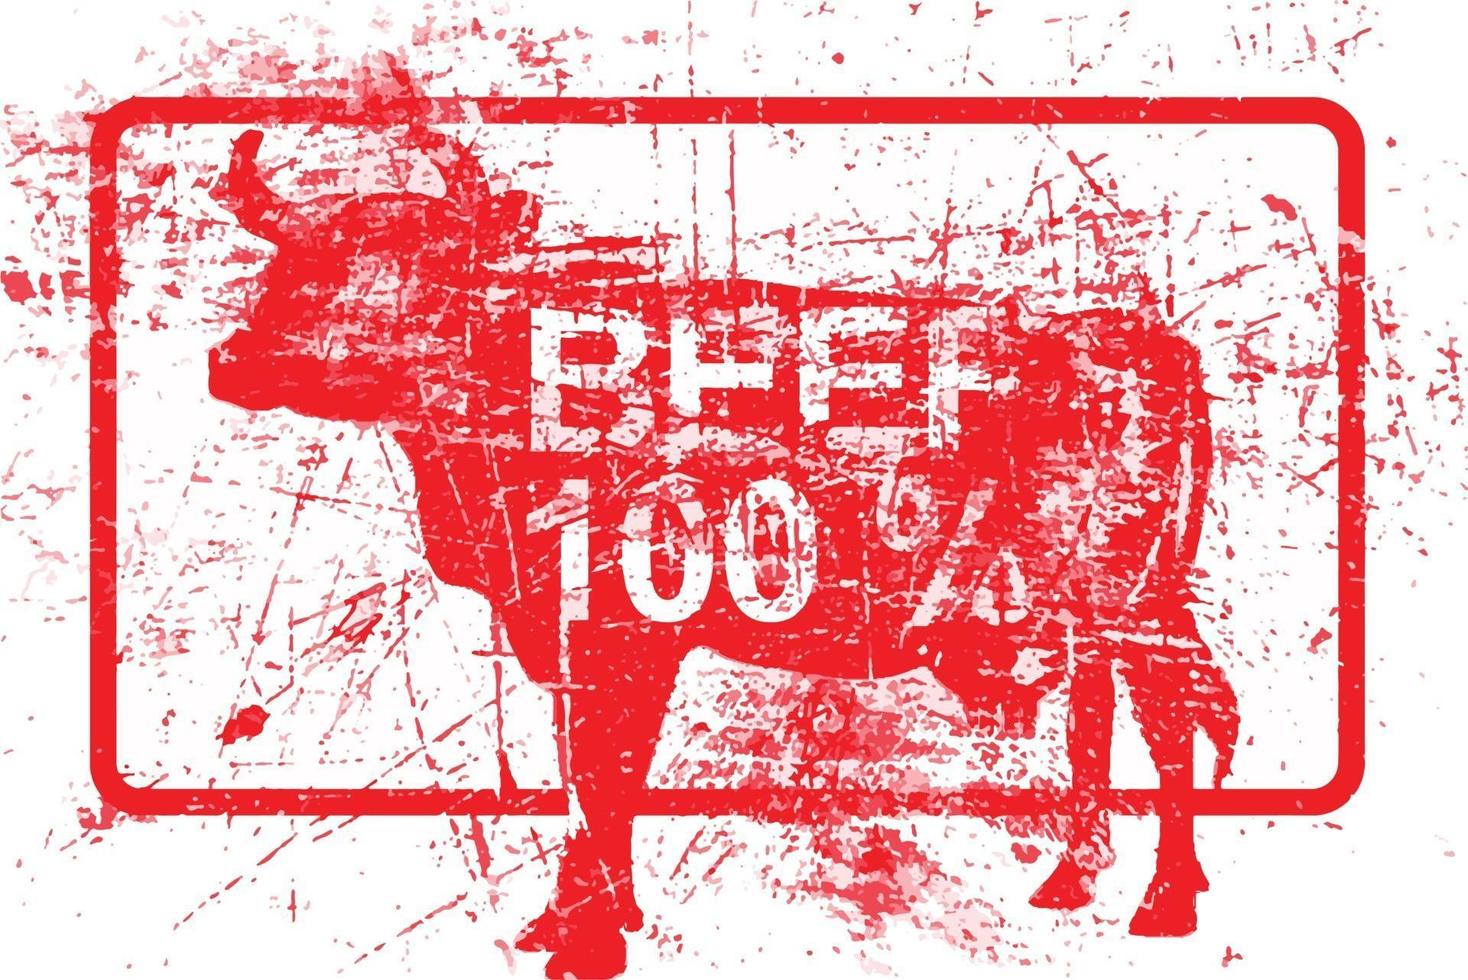 carne 100 por cento - carimbo sujo de borracha vermelha vetor